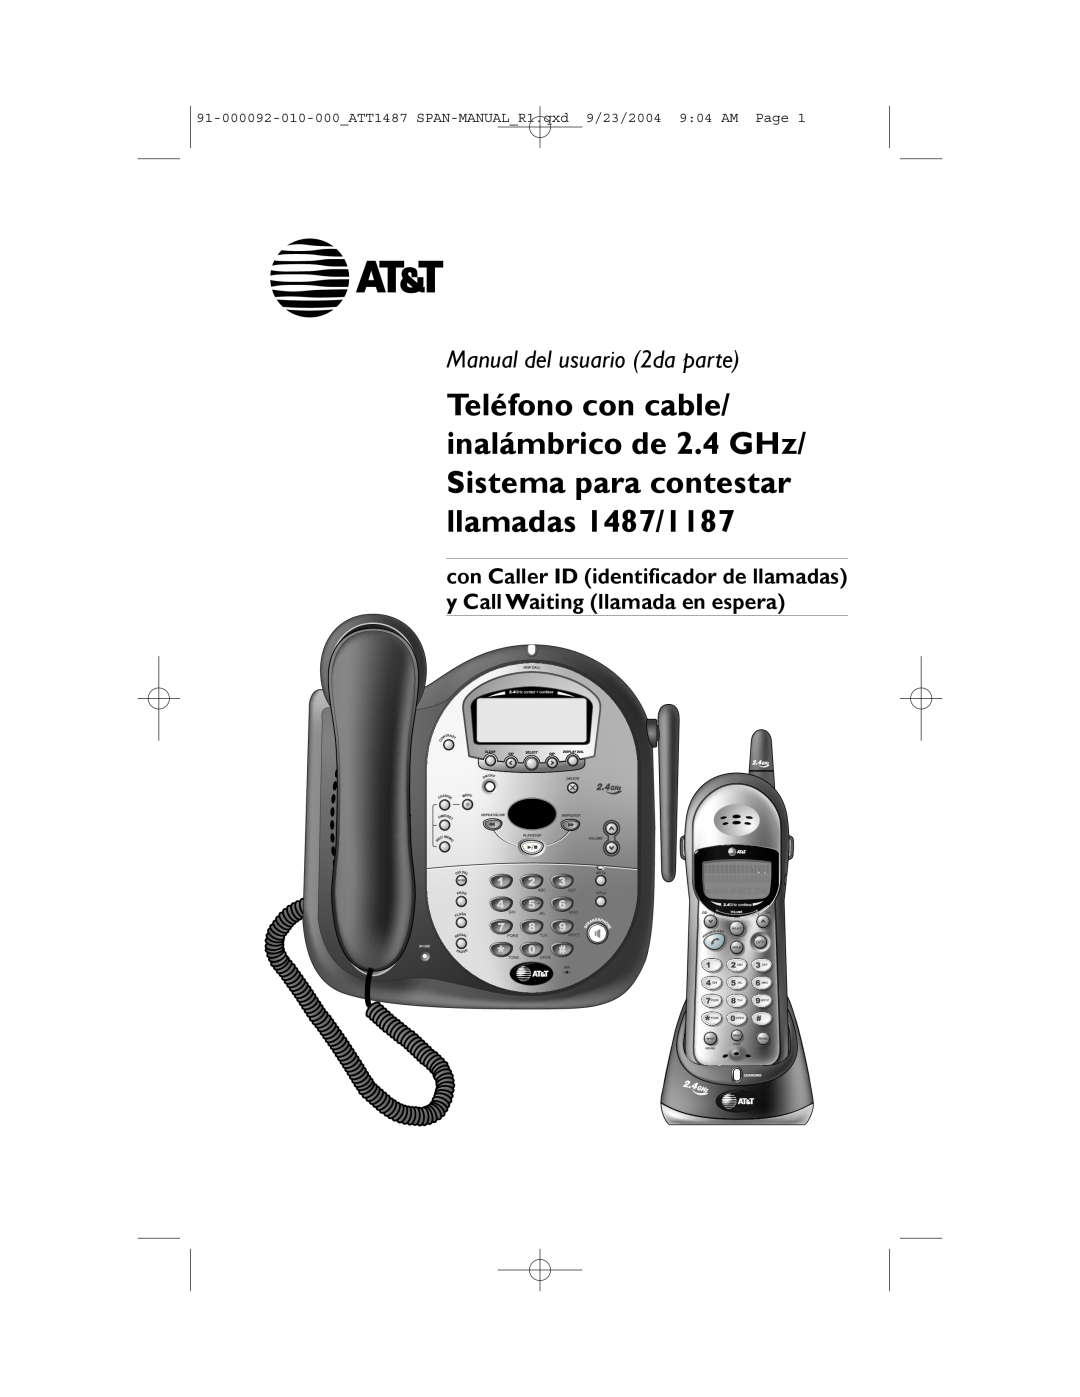 AT&T 1187 manual Manual del usuario 2da parte, 91-000092-010-000ATT1487 SPAN-MANUALR1.qxd 9/23/2004 904 AM Page 